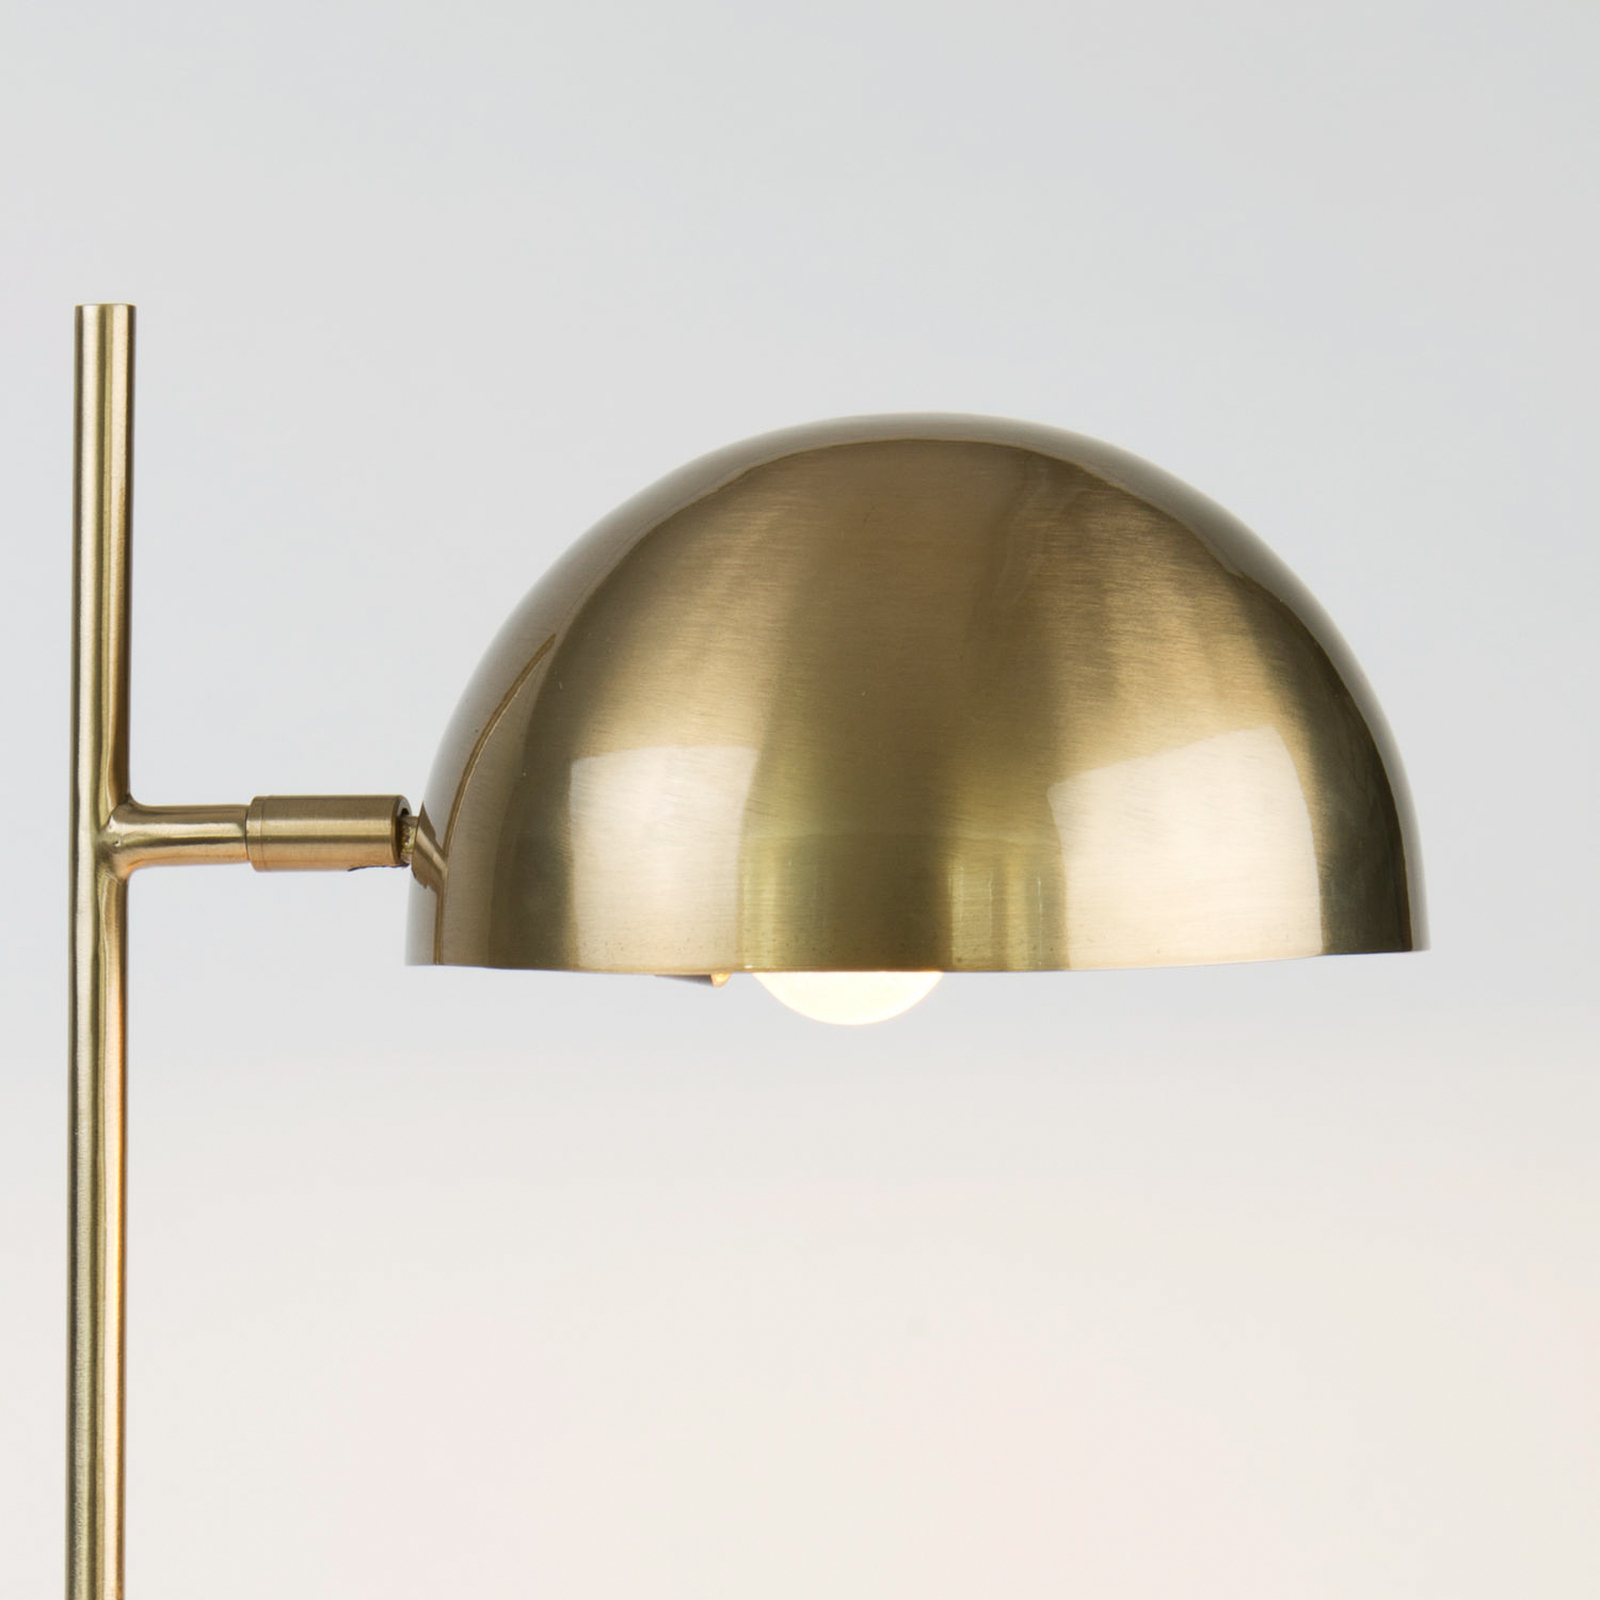 Miro bordlampe, guldfarvet, højde 58 cm, jern/messing